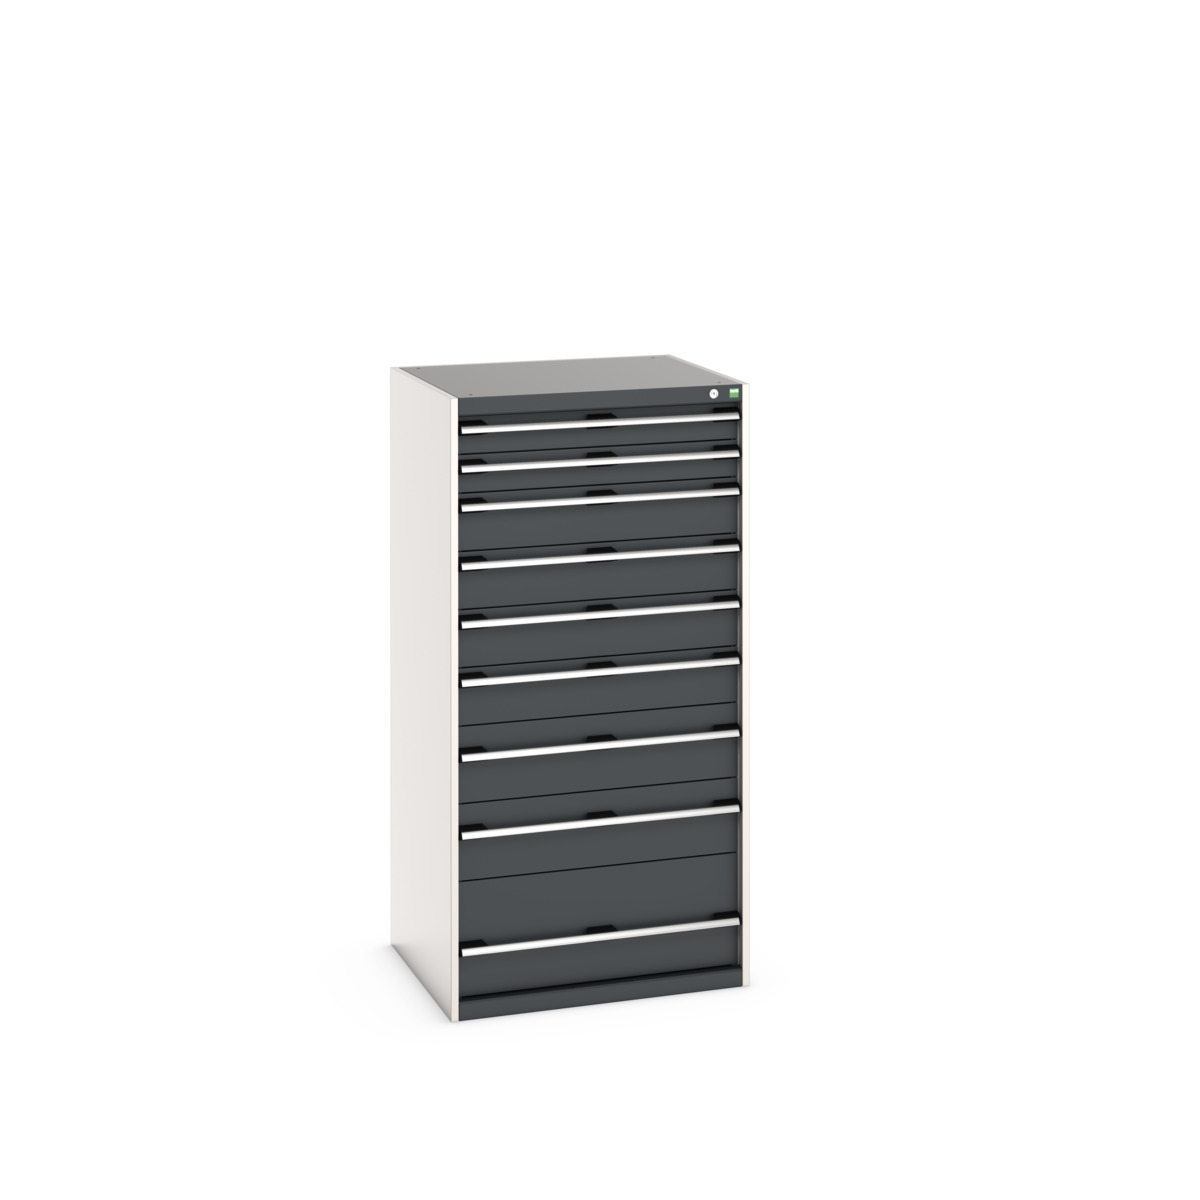 40028039. - cubio drawer cabinet 